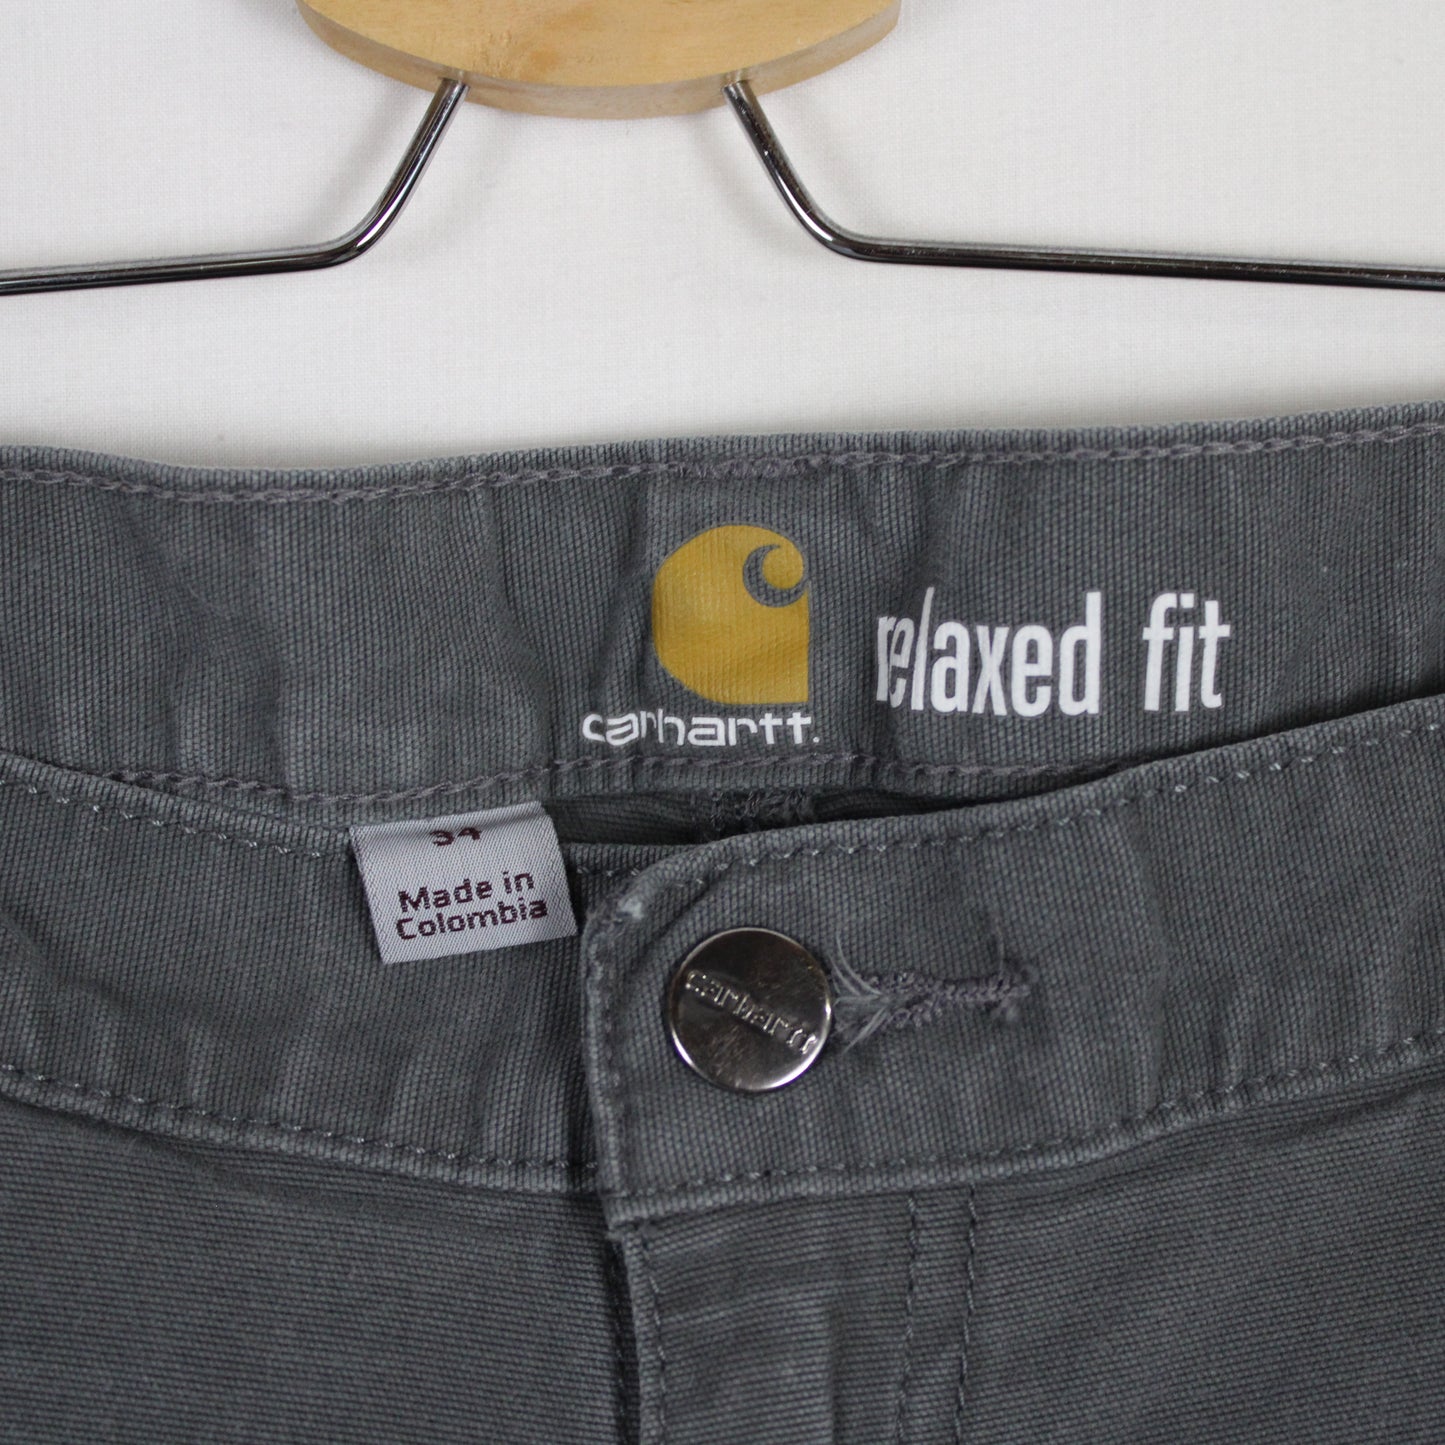 Vintage Carhartt Carpenter Shorts - 34